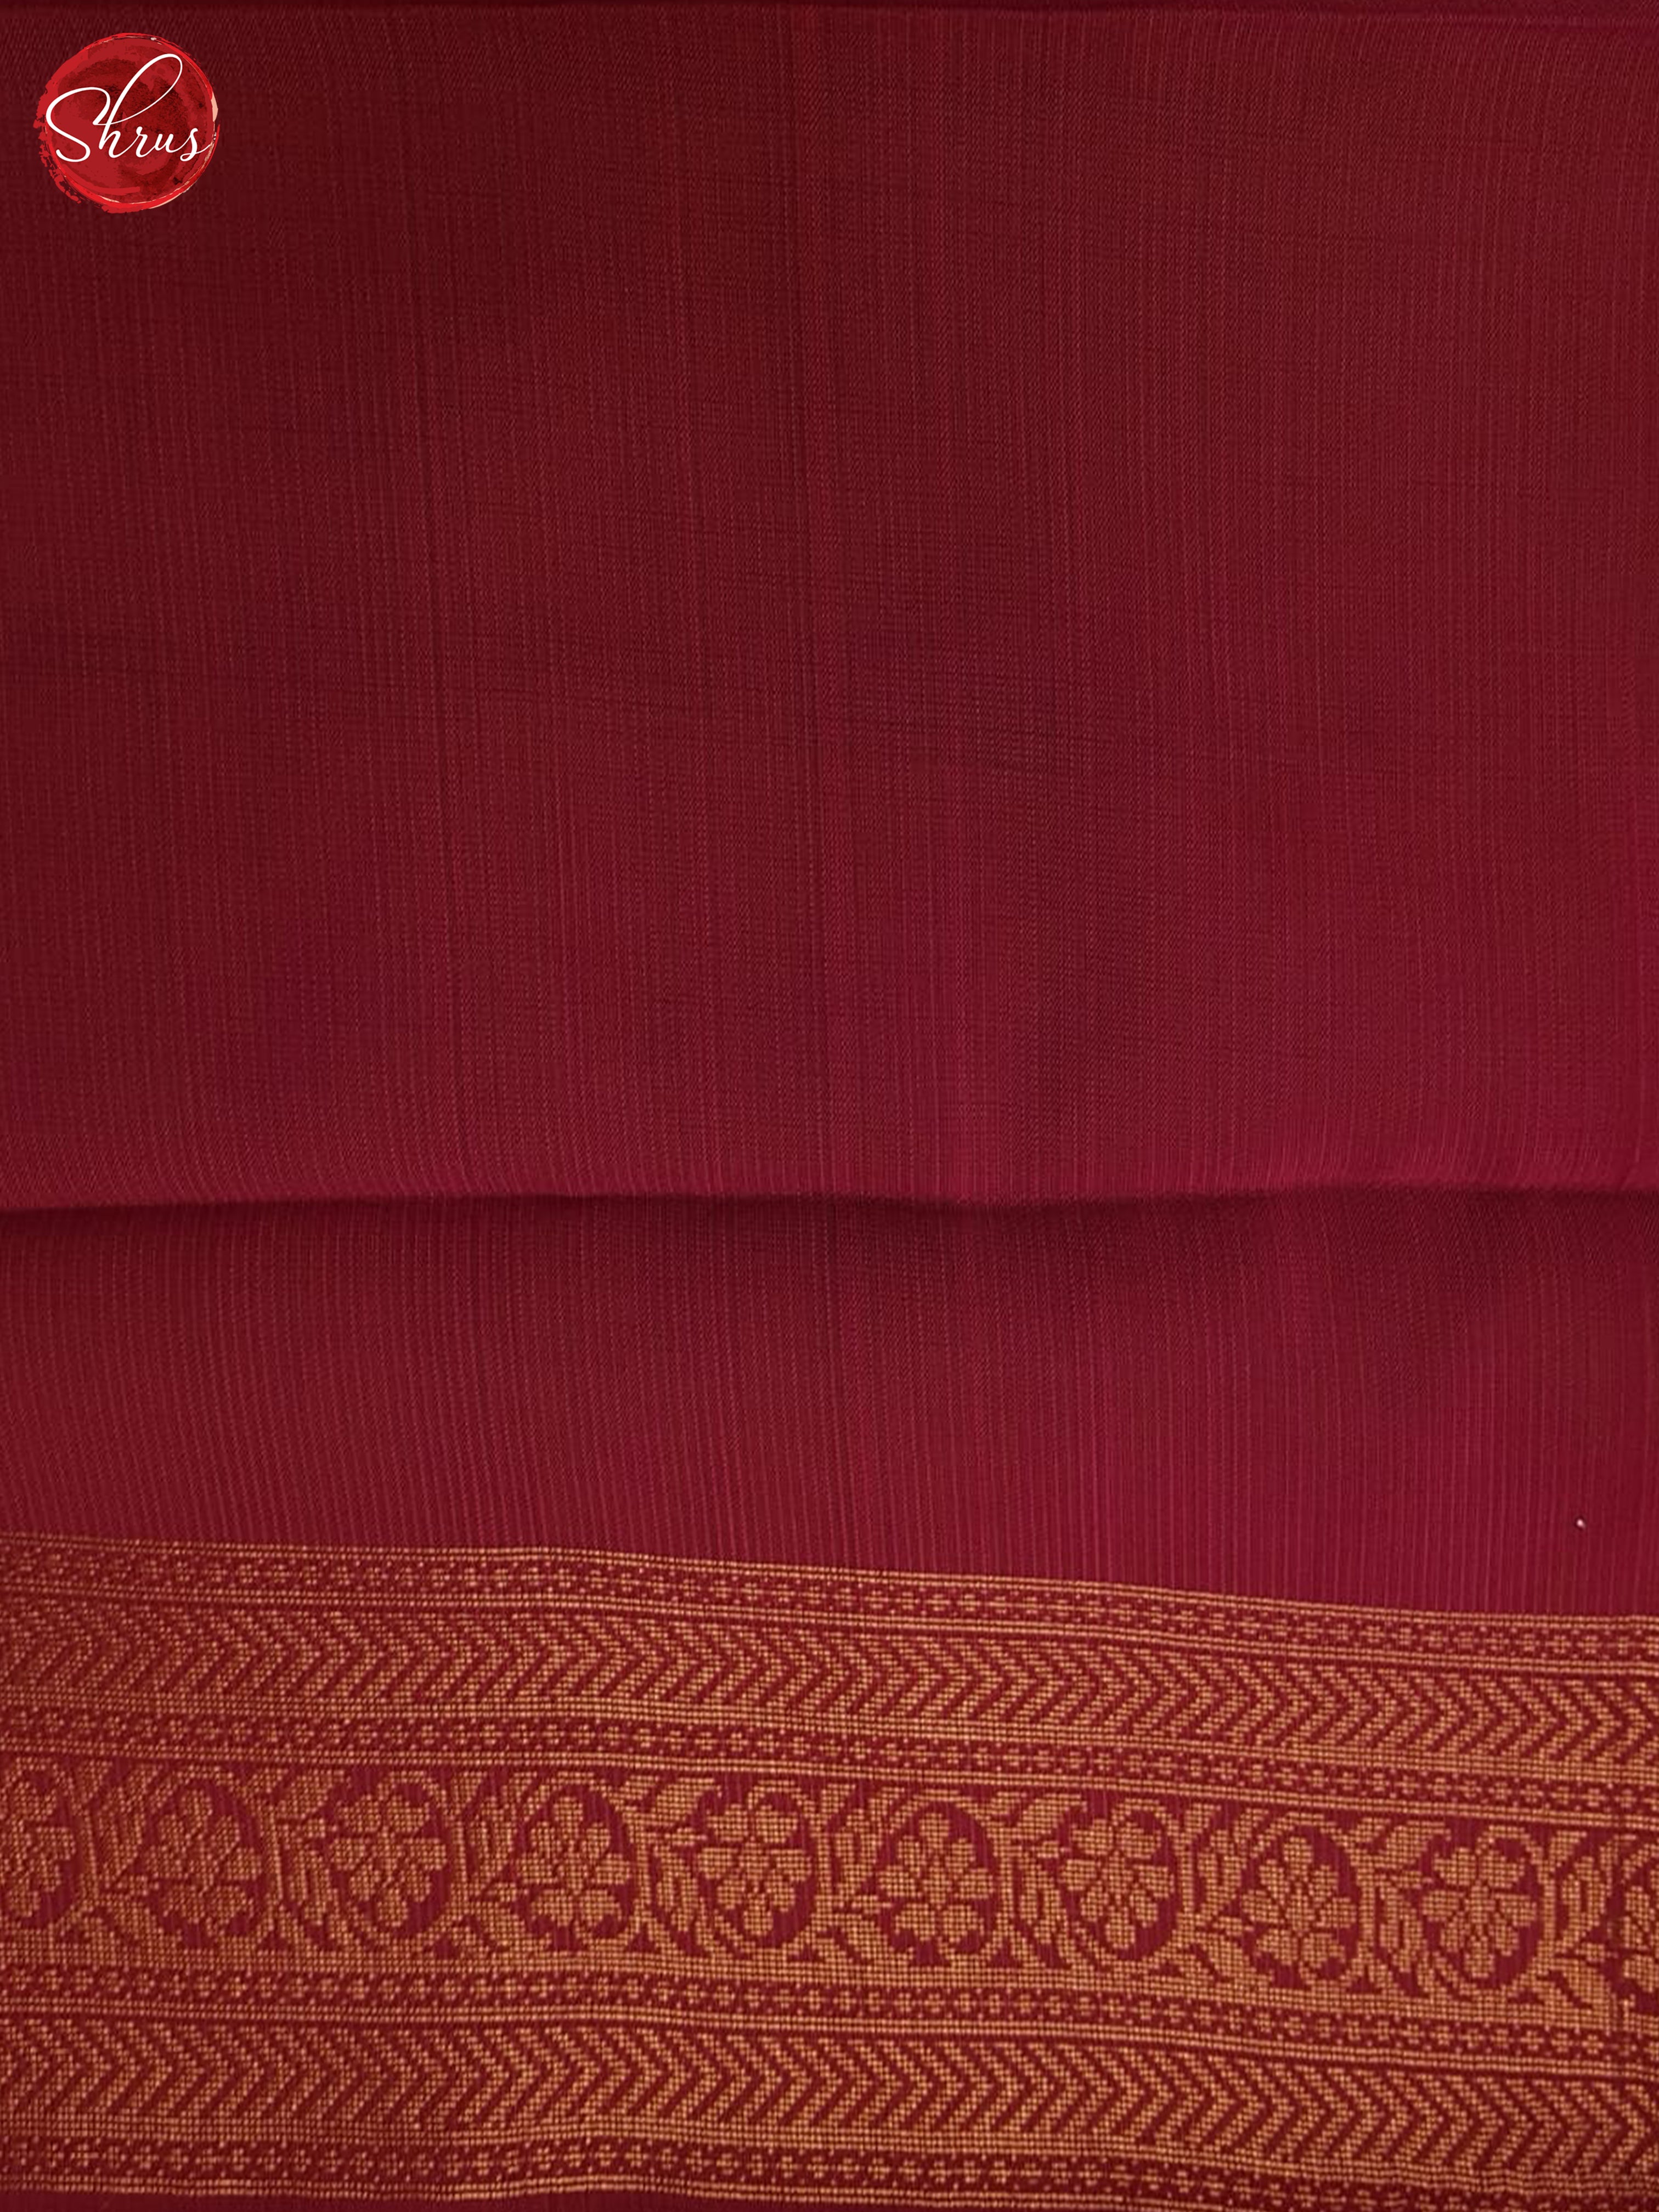 Blue And Pink-Semi soft silk saree - Shop on ShrusEternity.com